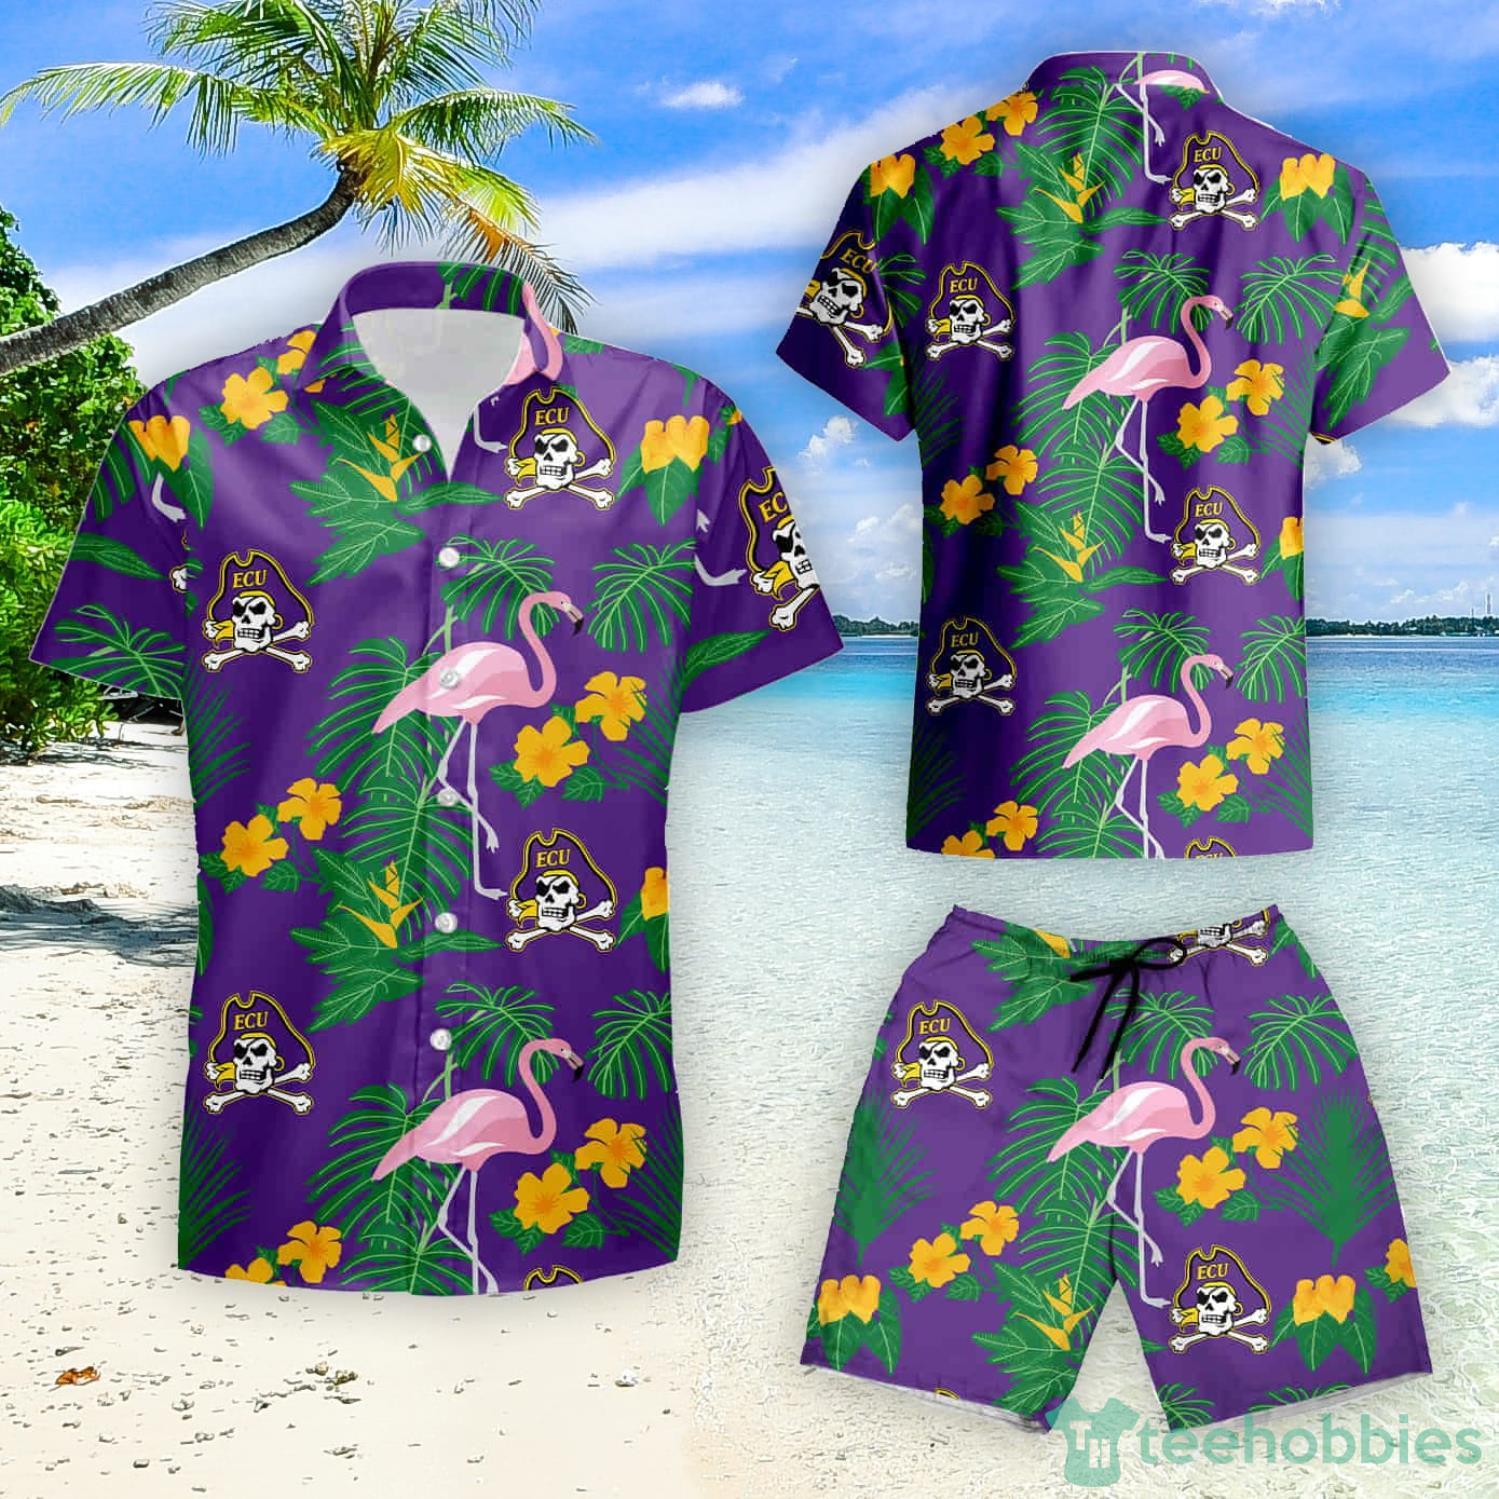 East Carolina Pirates 3D Hawaiian Shirt Coconut Tree Tropical Grunge NCAA  Summer Beach For Fans Gift - Freedomdesign